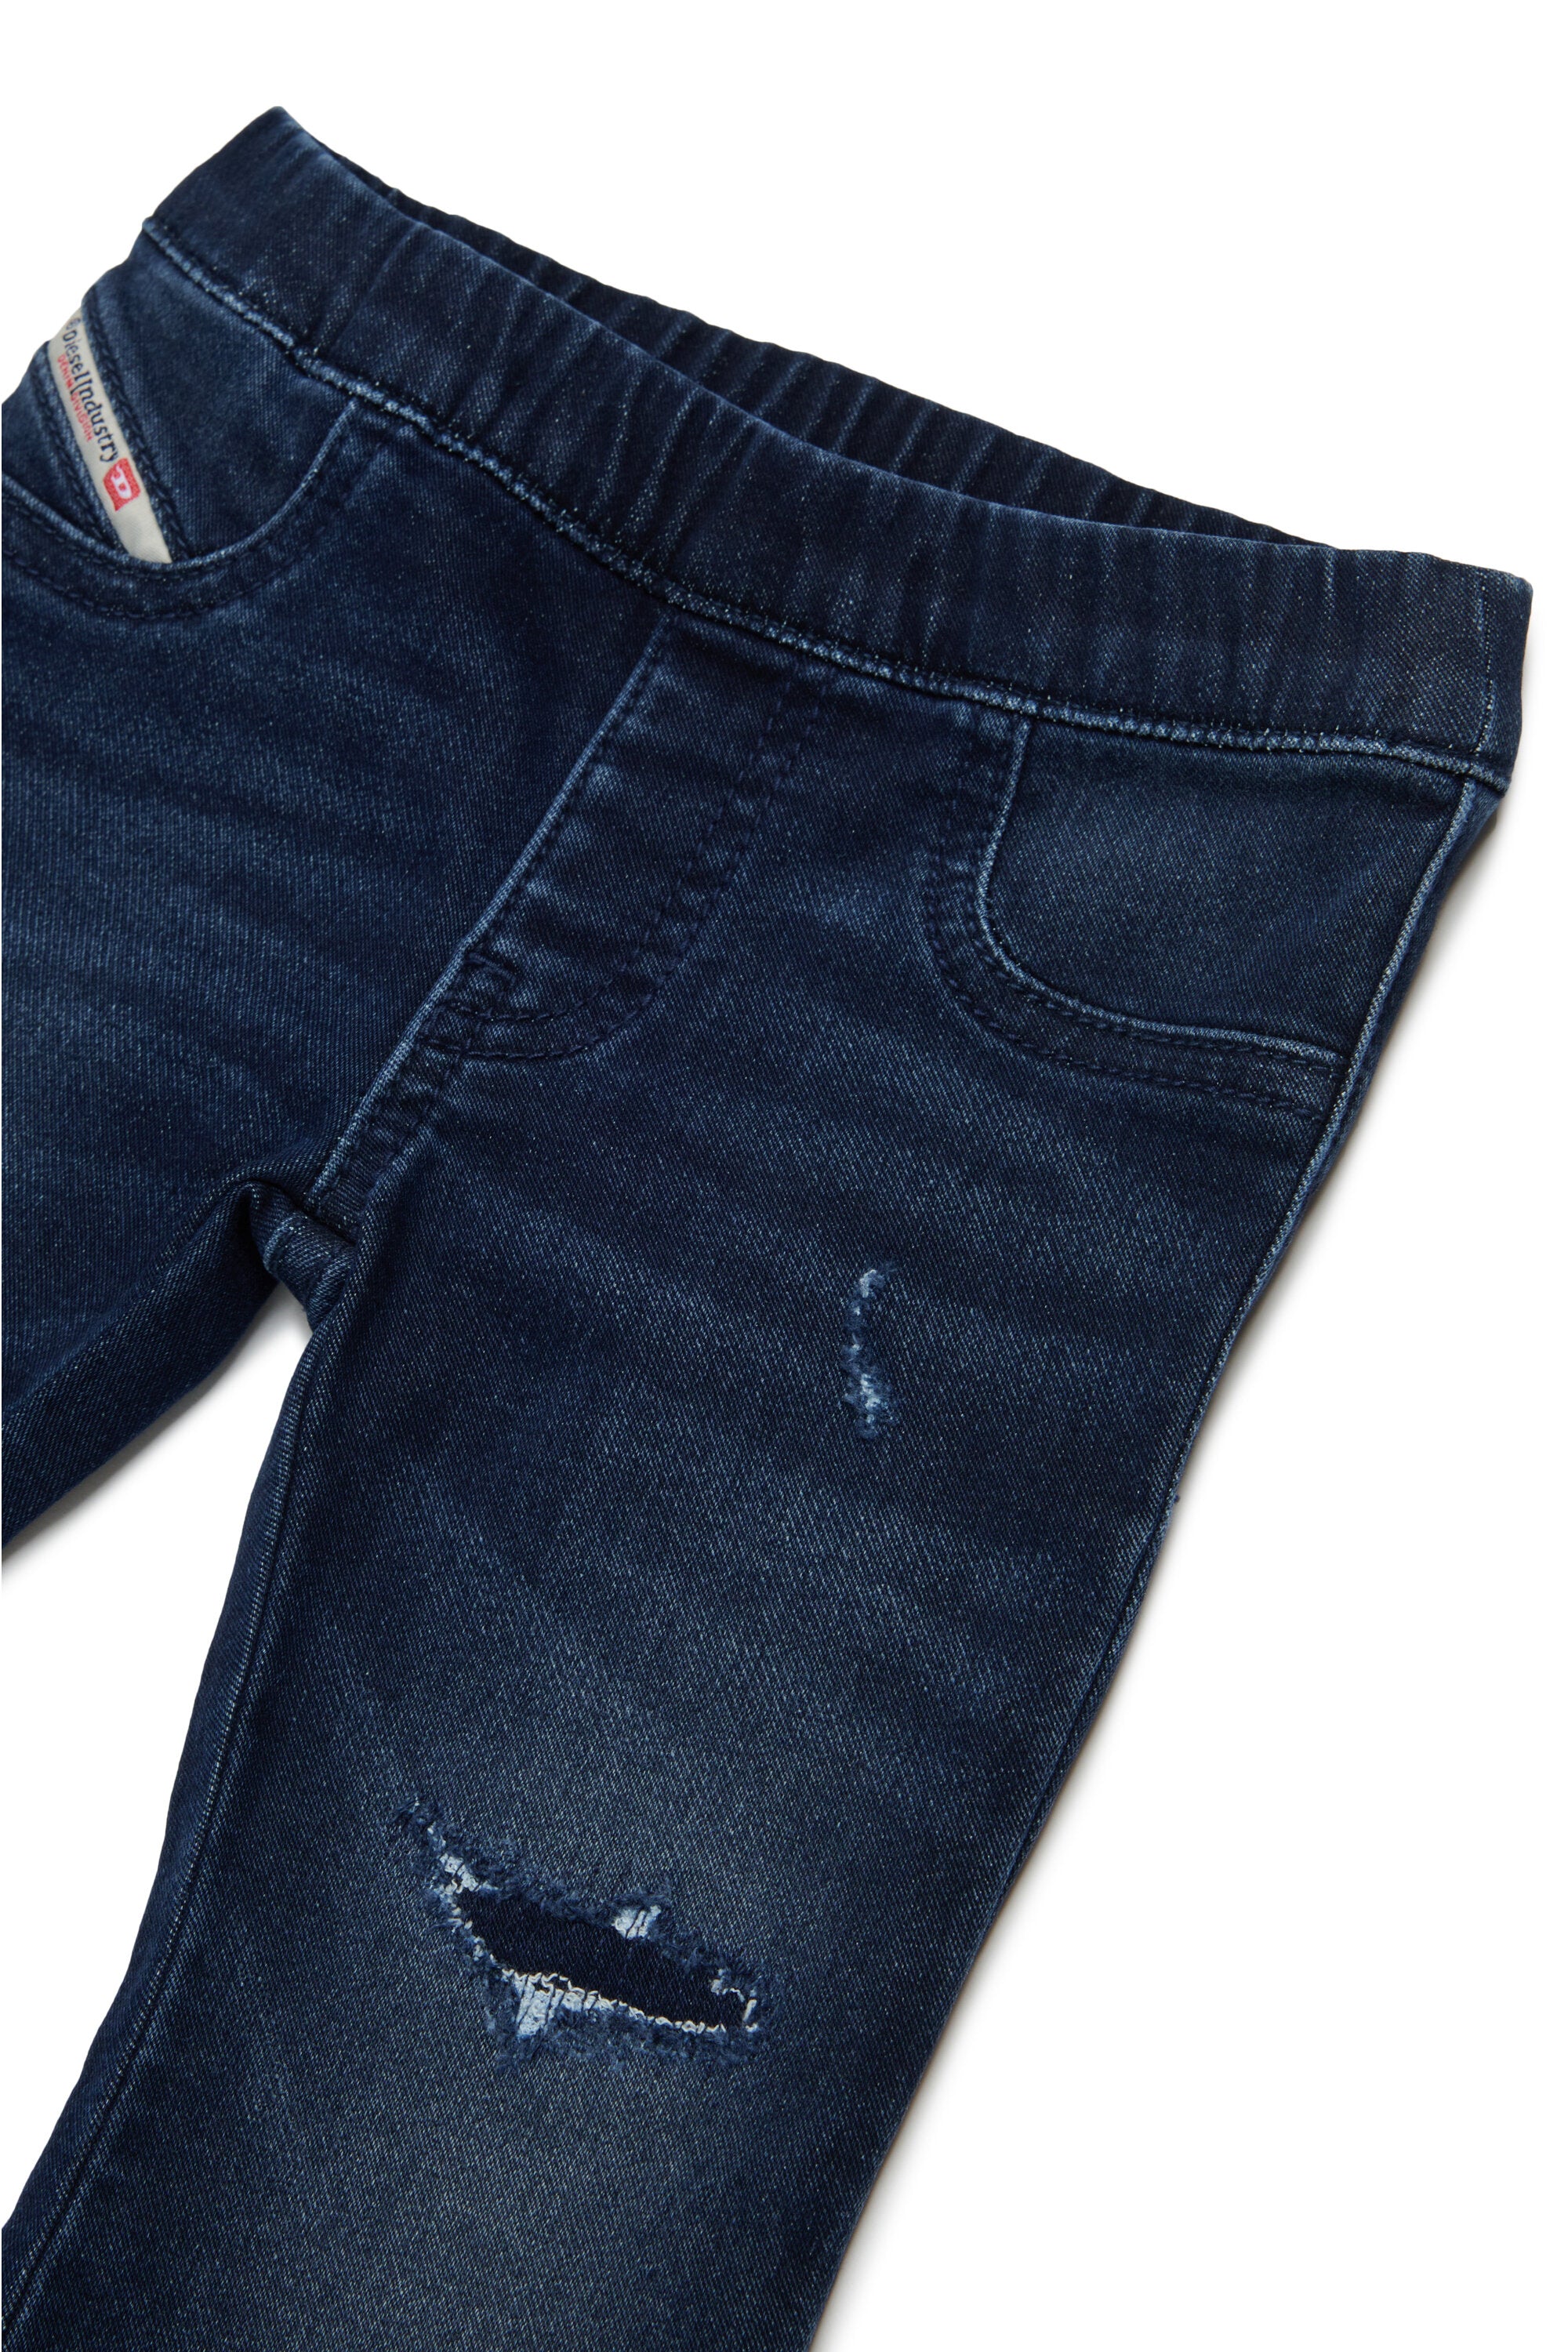 Dark JoggJeans® trousers with tears